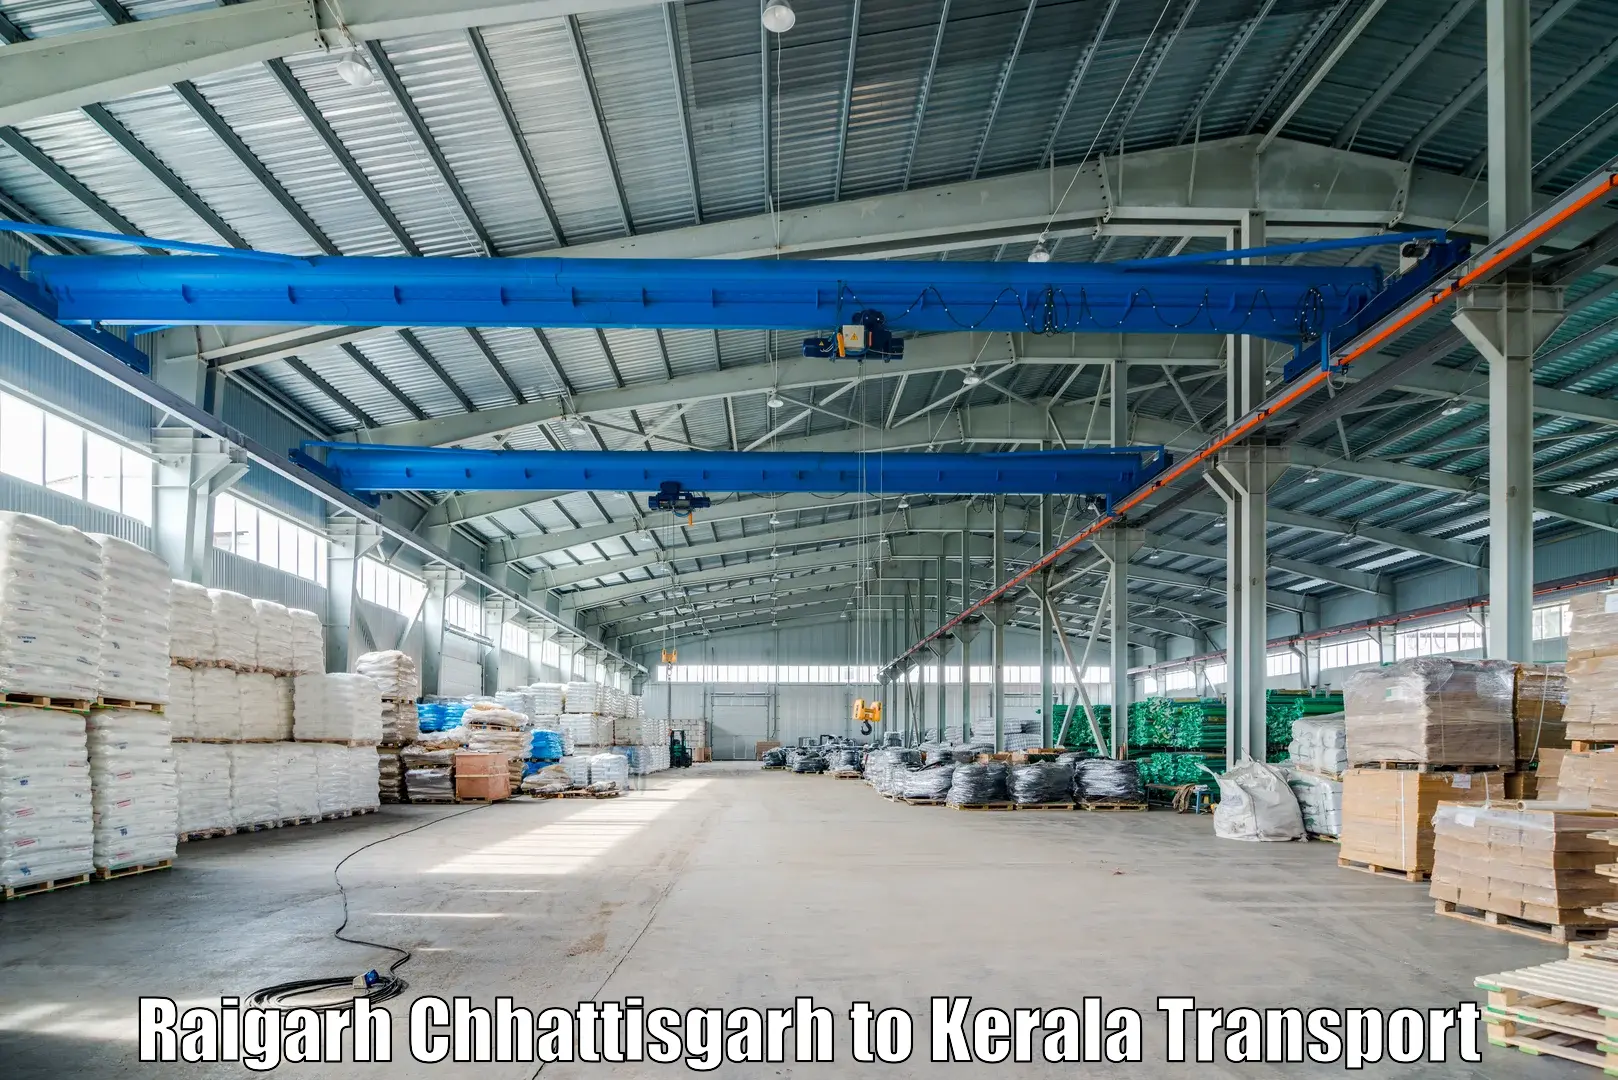 Transport in sharing Raigarh Chhattisgarh to Kerala